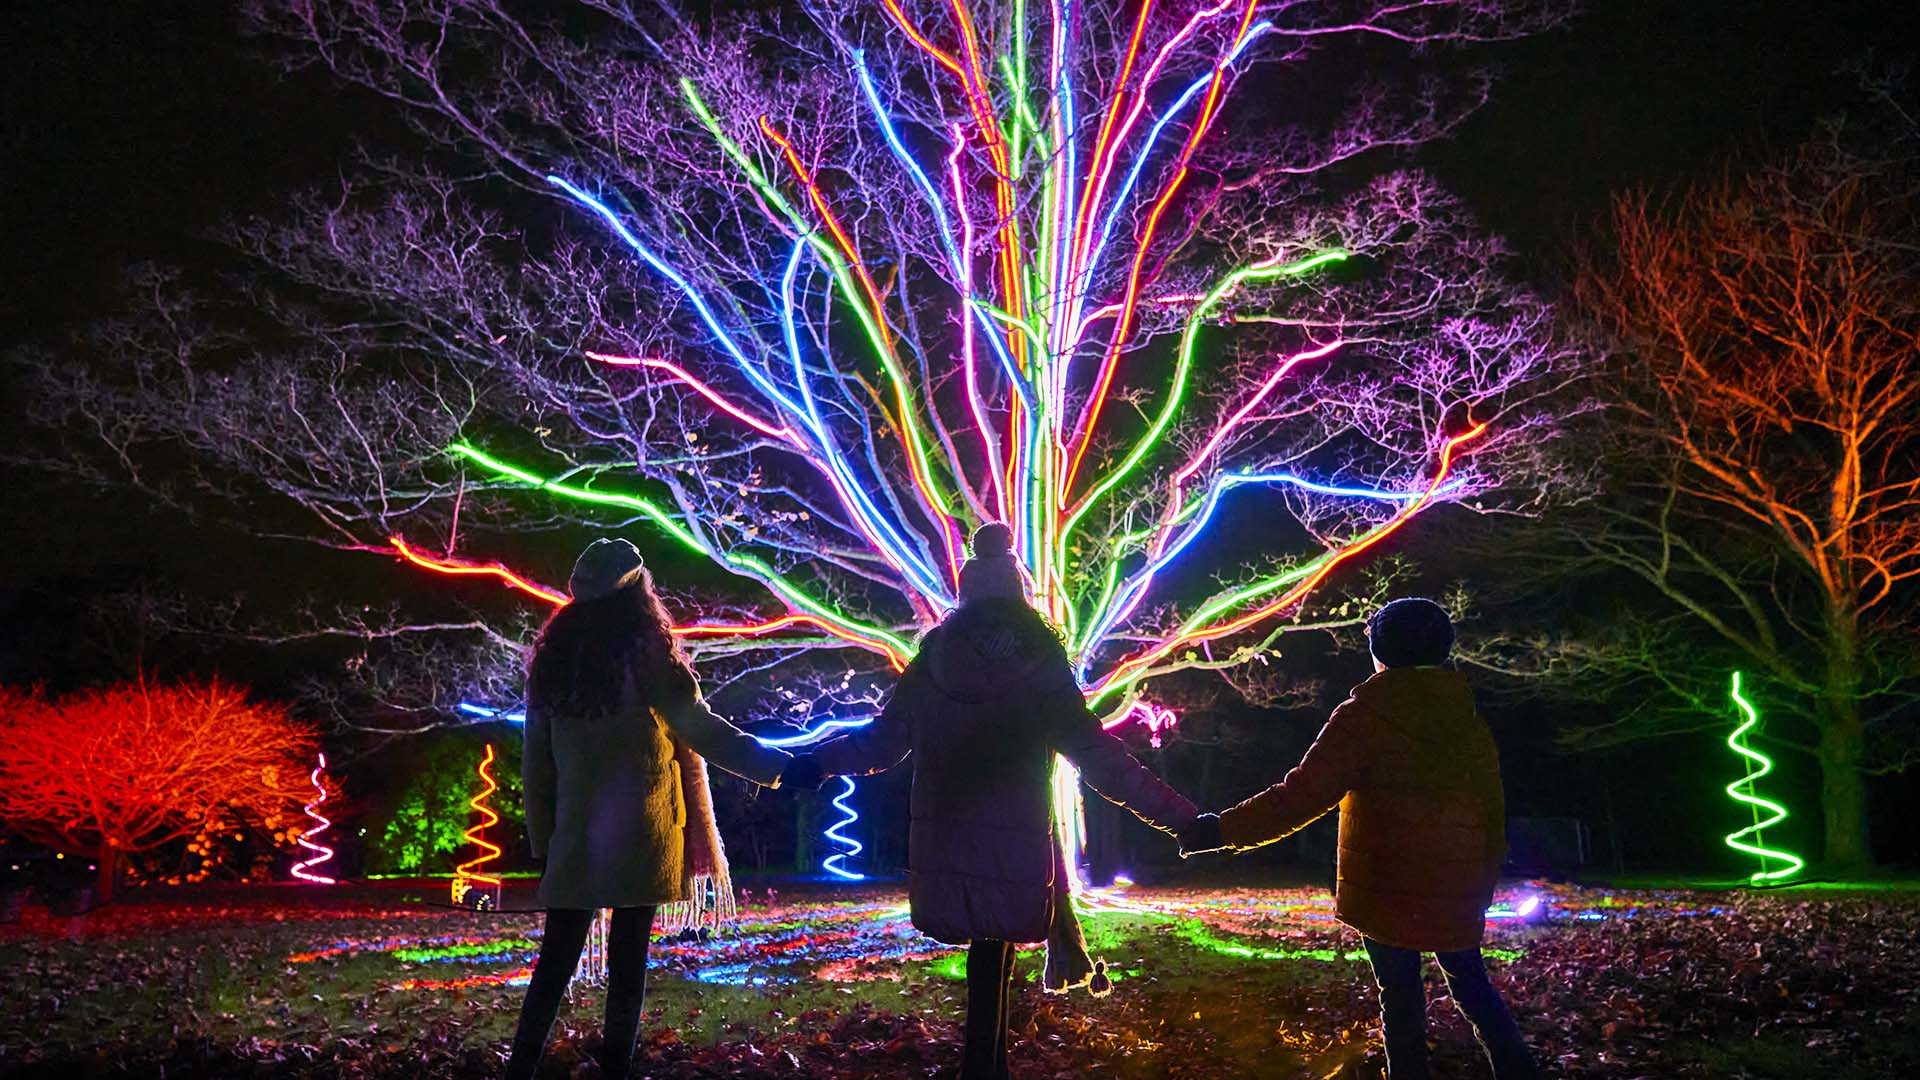 After-Dark Light Festival Lightscape Will Brighten Up the Royal Botanic Gardens Melbourne This Winter